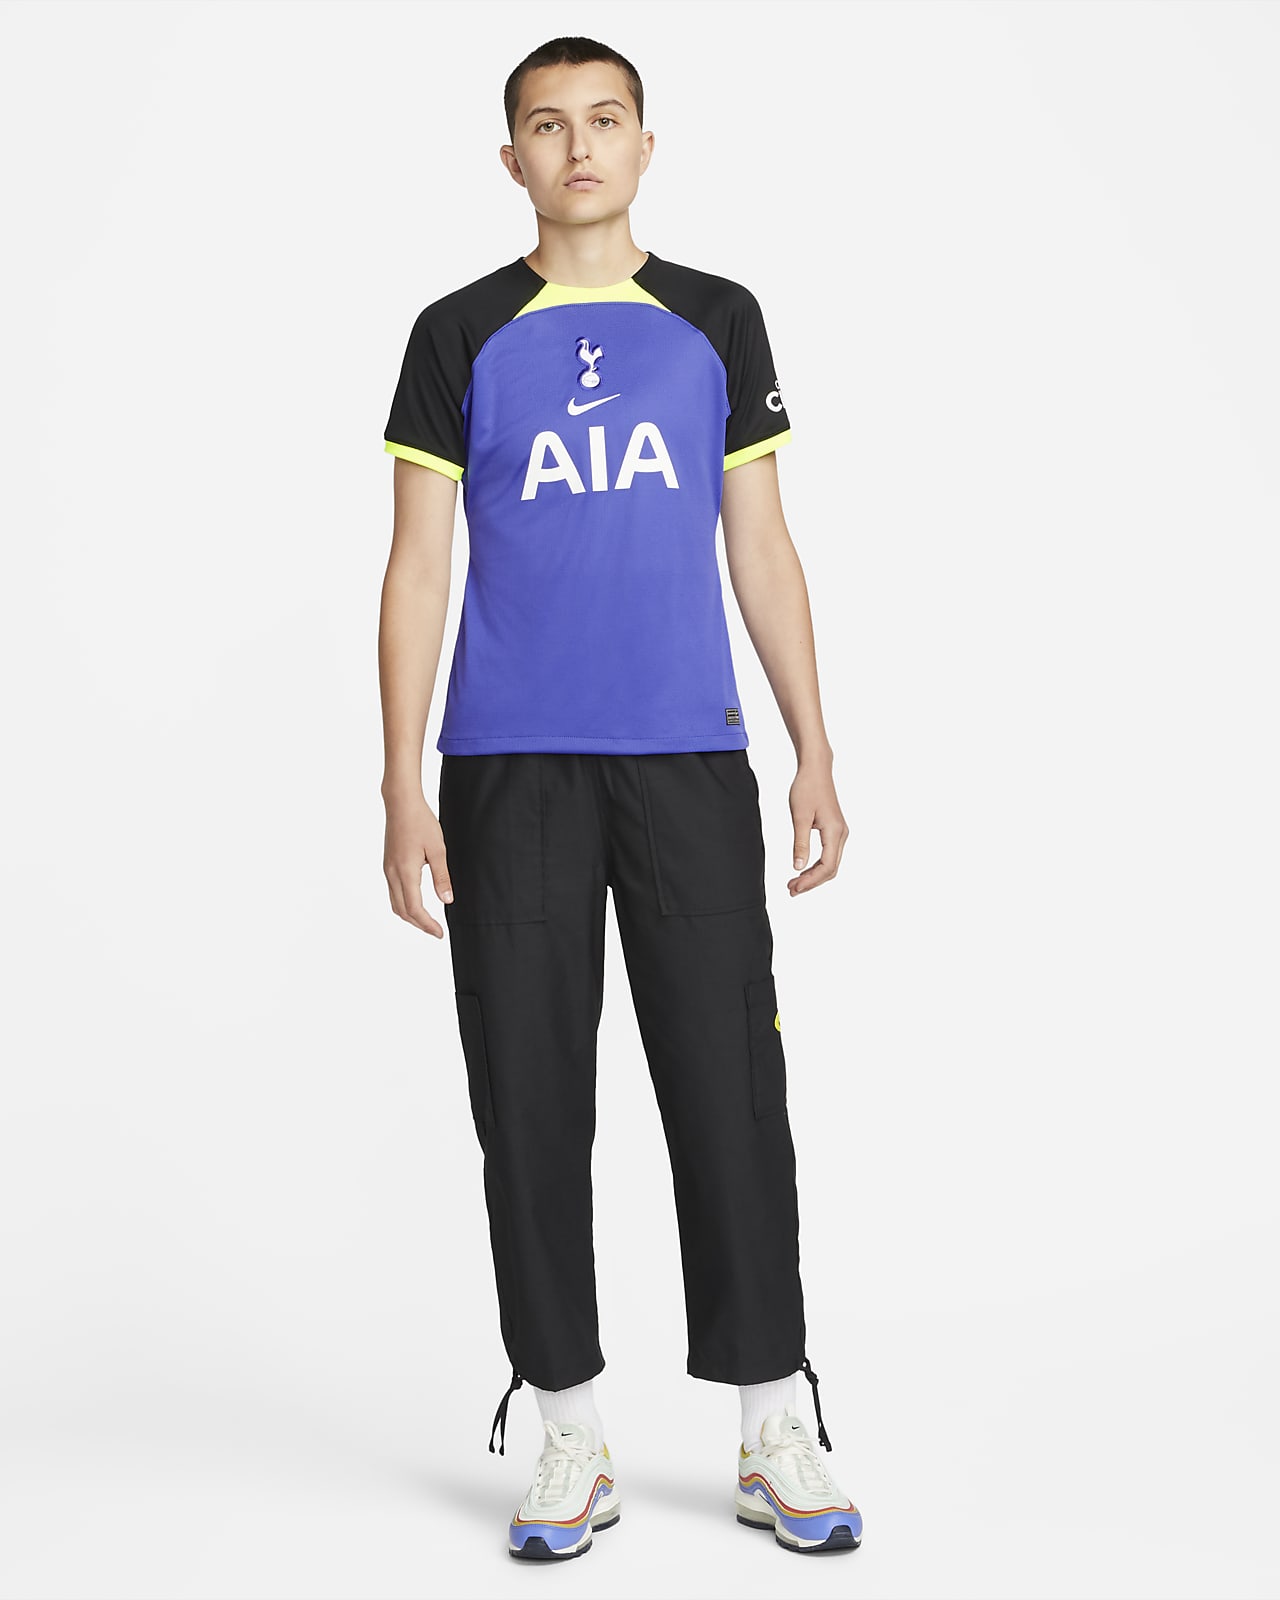 Tottenham Hotspur 2019/20 Nike Home and Away Kits - FOOTBALL FASHION